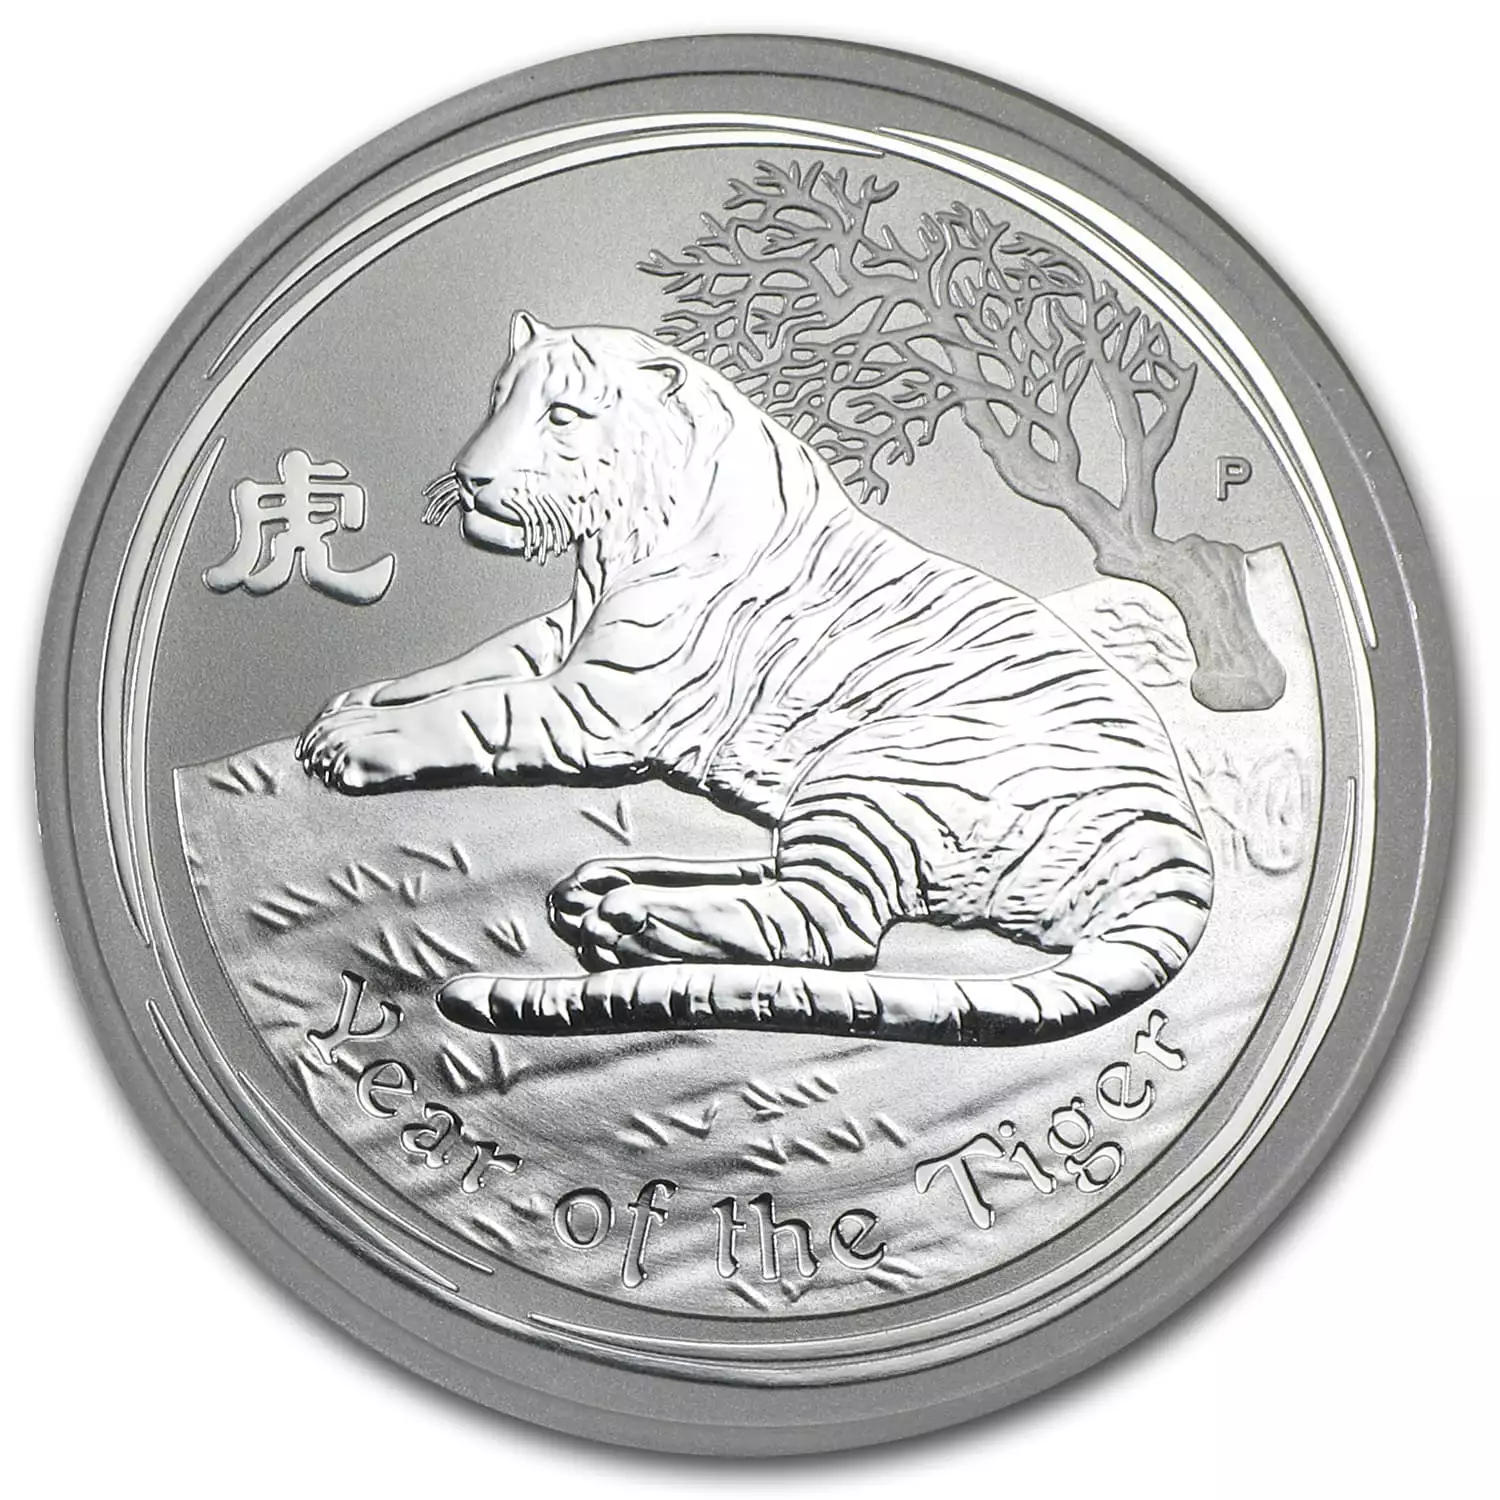 2010 1oz Australian Perth Mint Silver Lunar: Year of the Tiger (2)